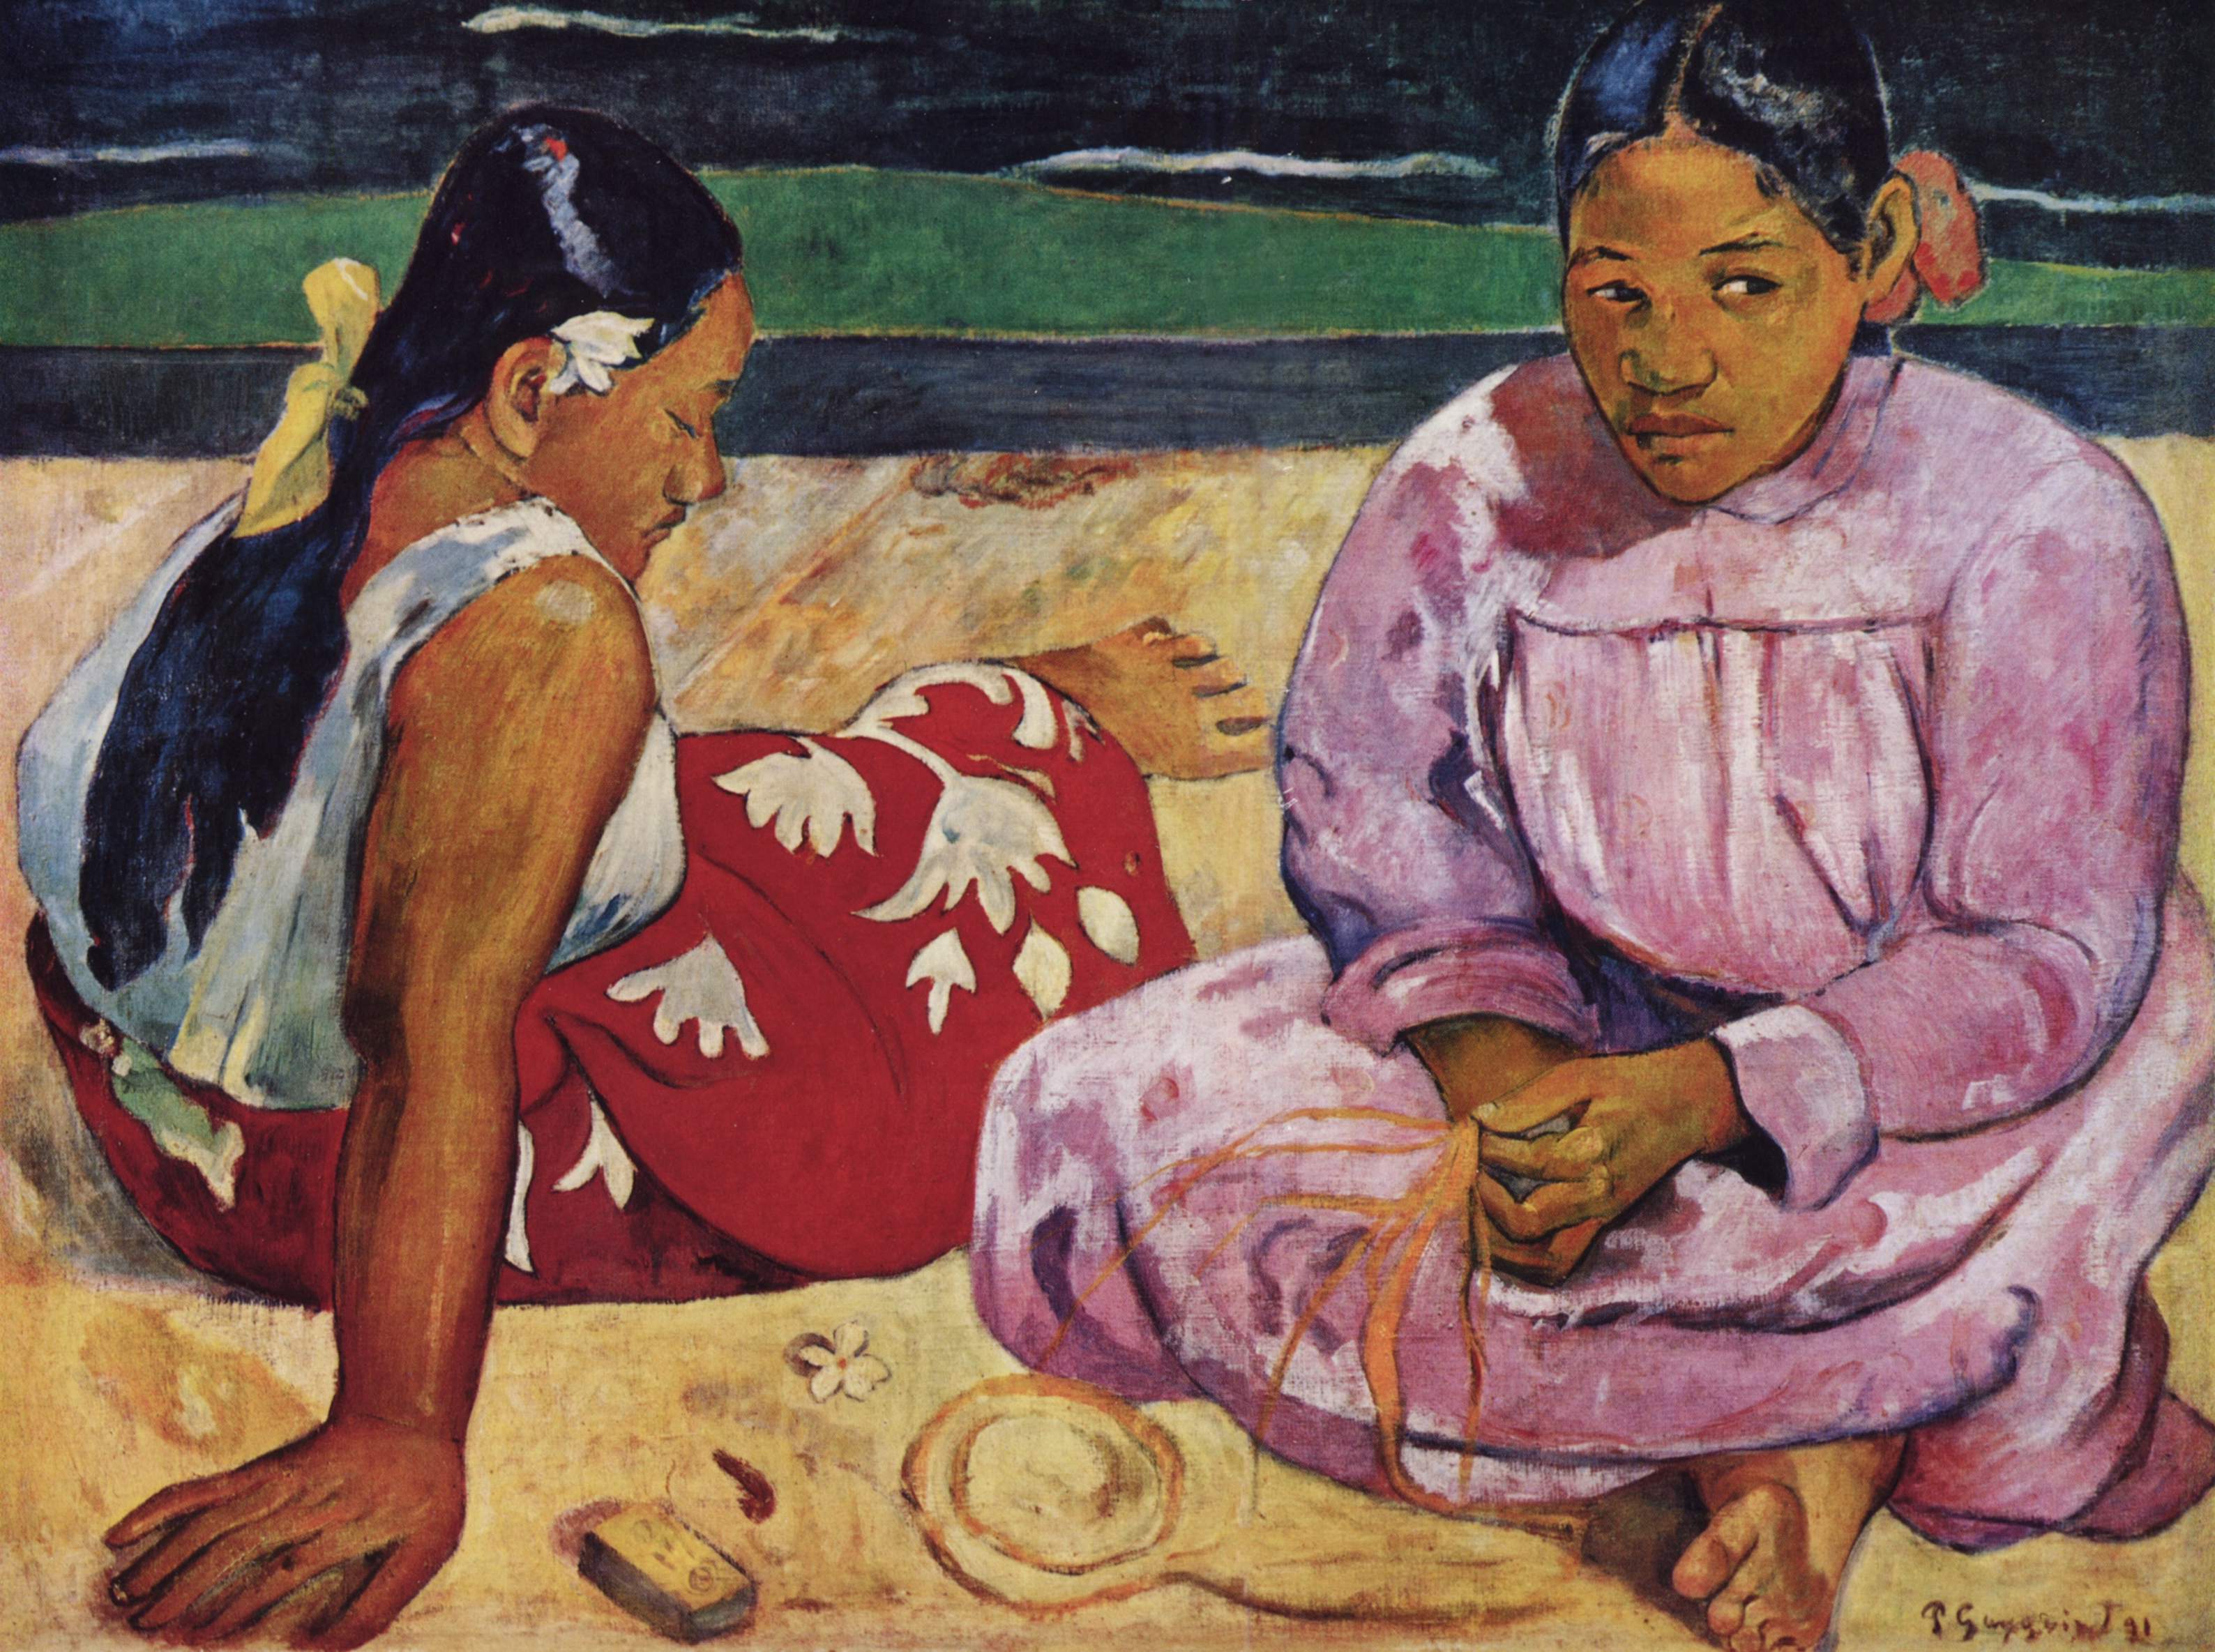 Femmes de Tahiti by Paul Gauguin - 1891 - 69 cm × 91 cm Musée d'Orsay